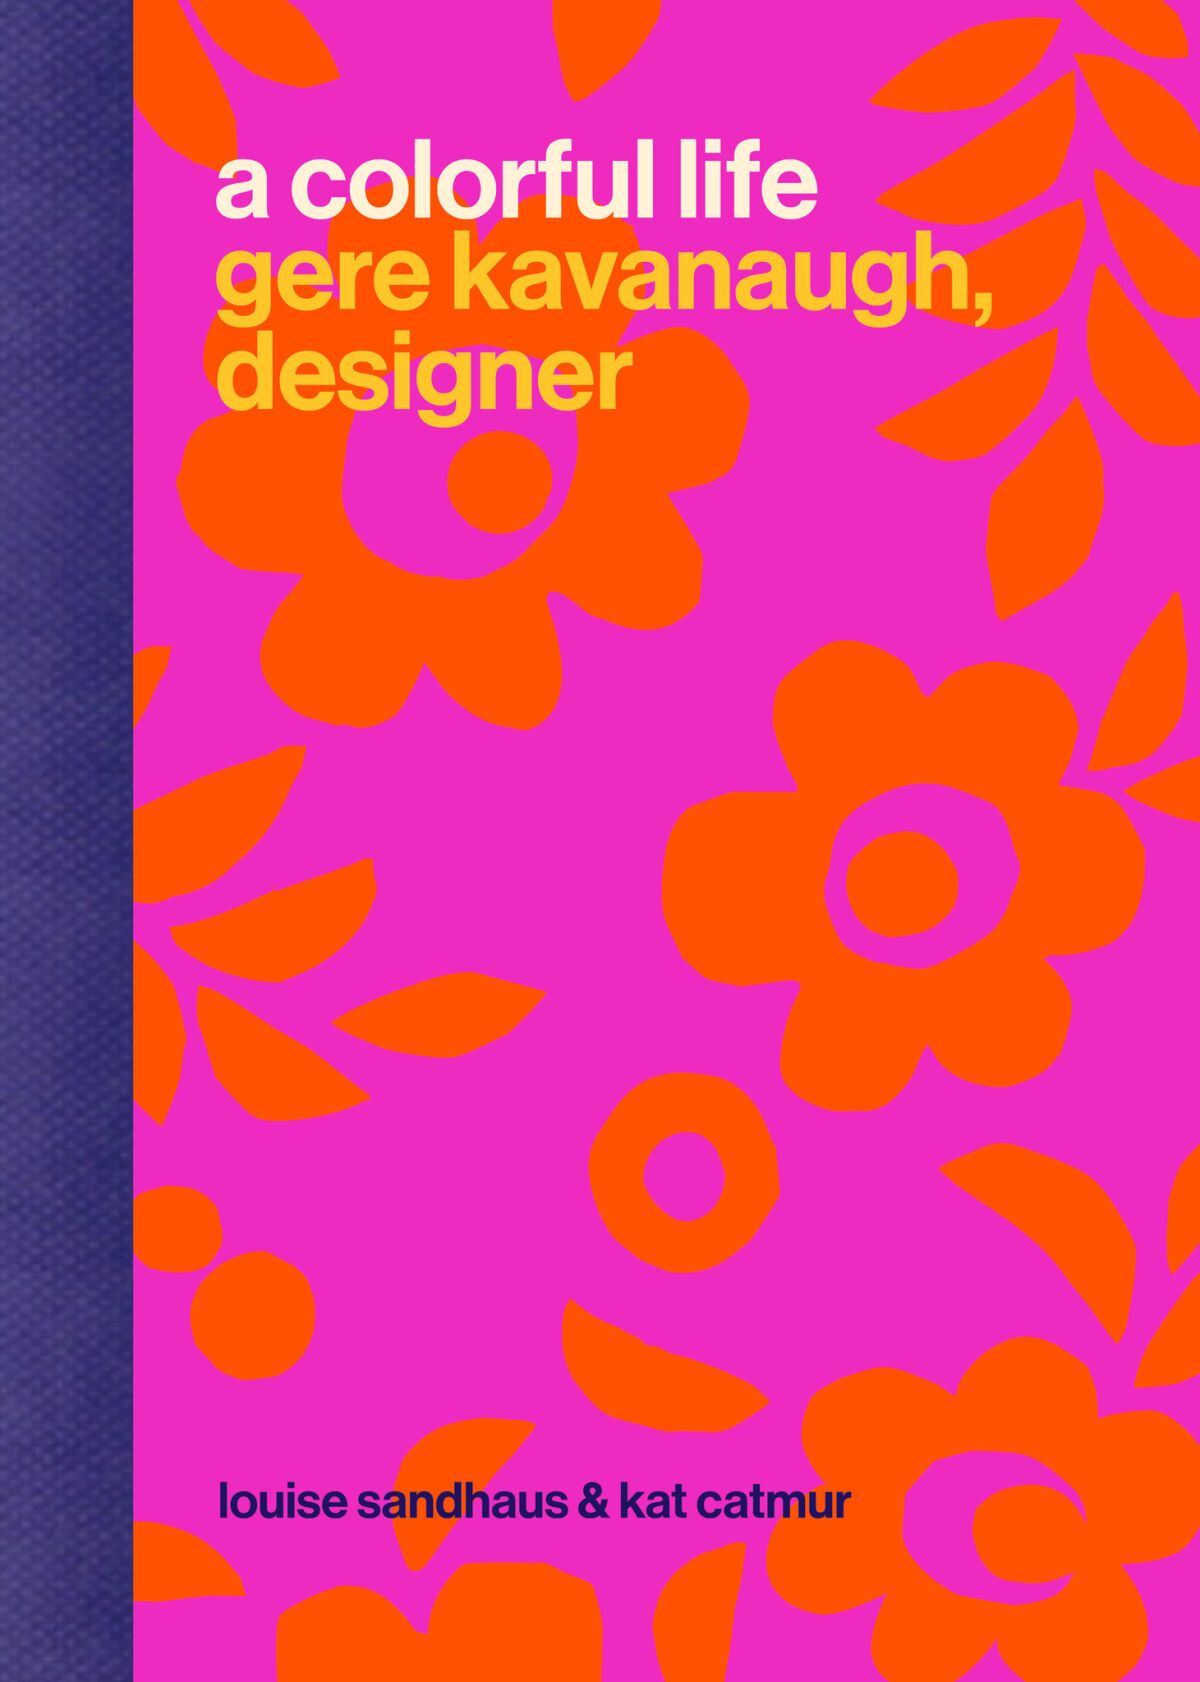 Jacket of "A Colorful Life: Gere Kavanaugh, Designer" by Louise Sandhaus & Kat Catmur.